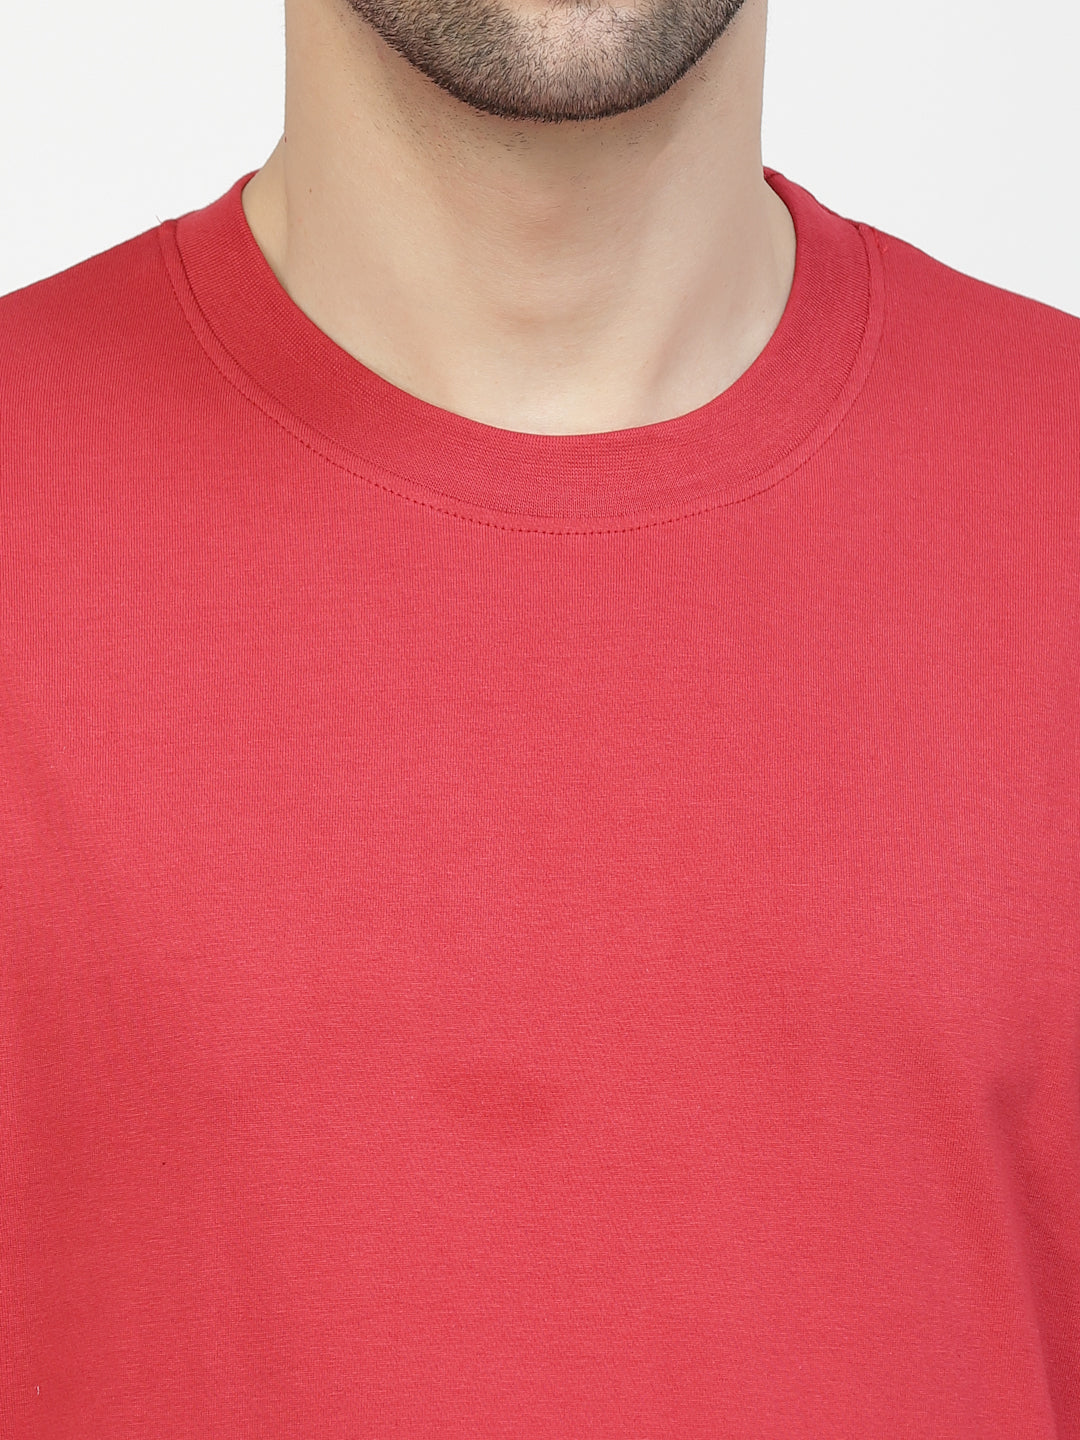 Red Plain Oversized Drop Shoulder Unisex Tshirt By Gavin Paris